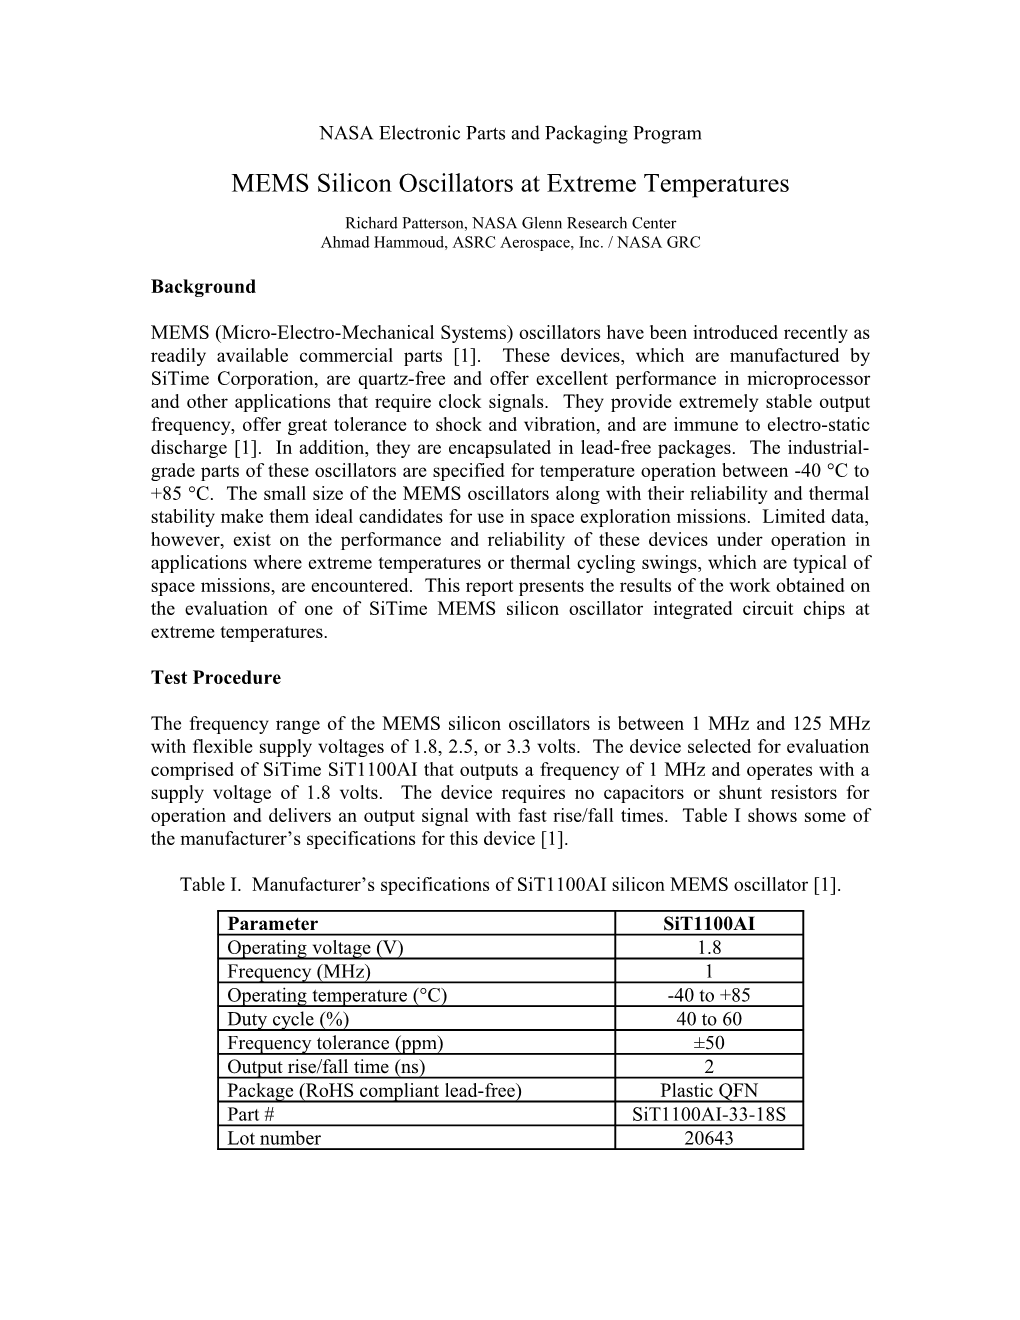 MEMS Silicon Oscillators at Extreme Temperatures